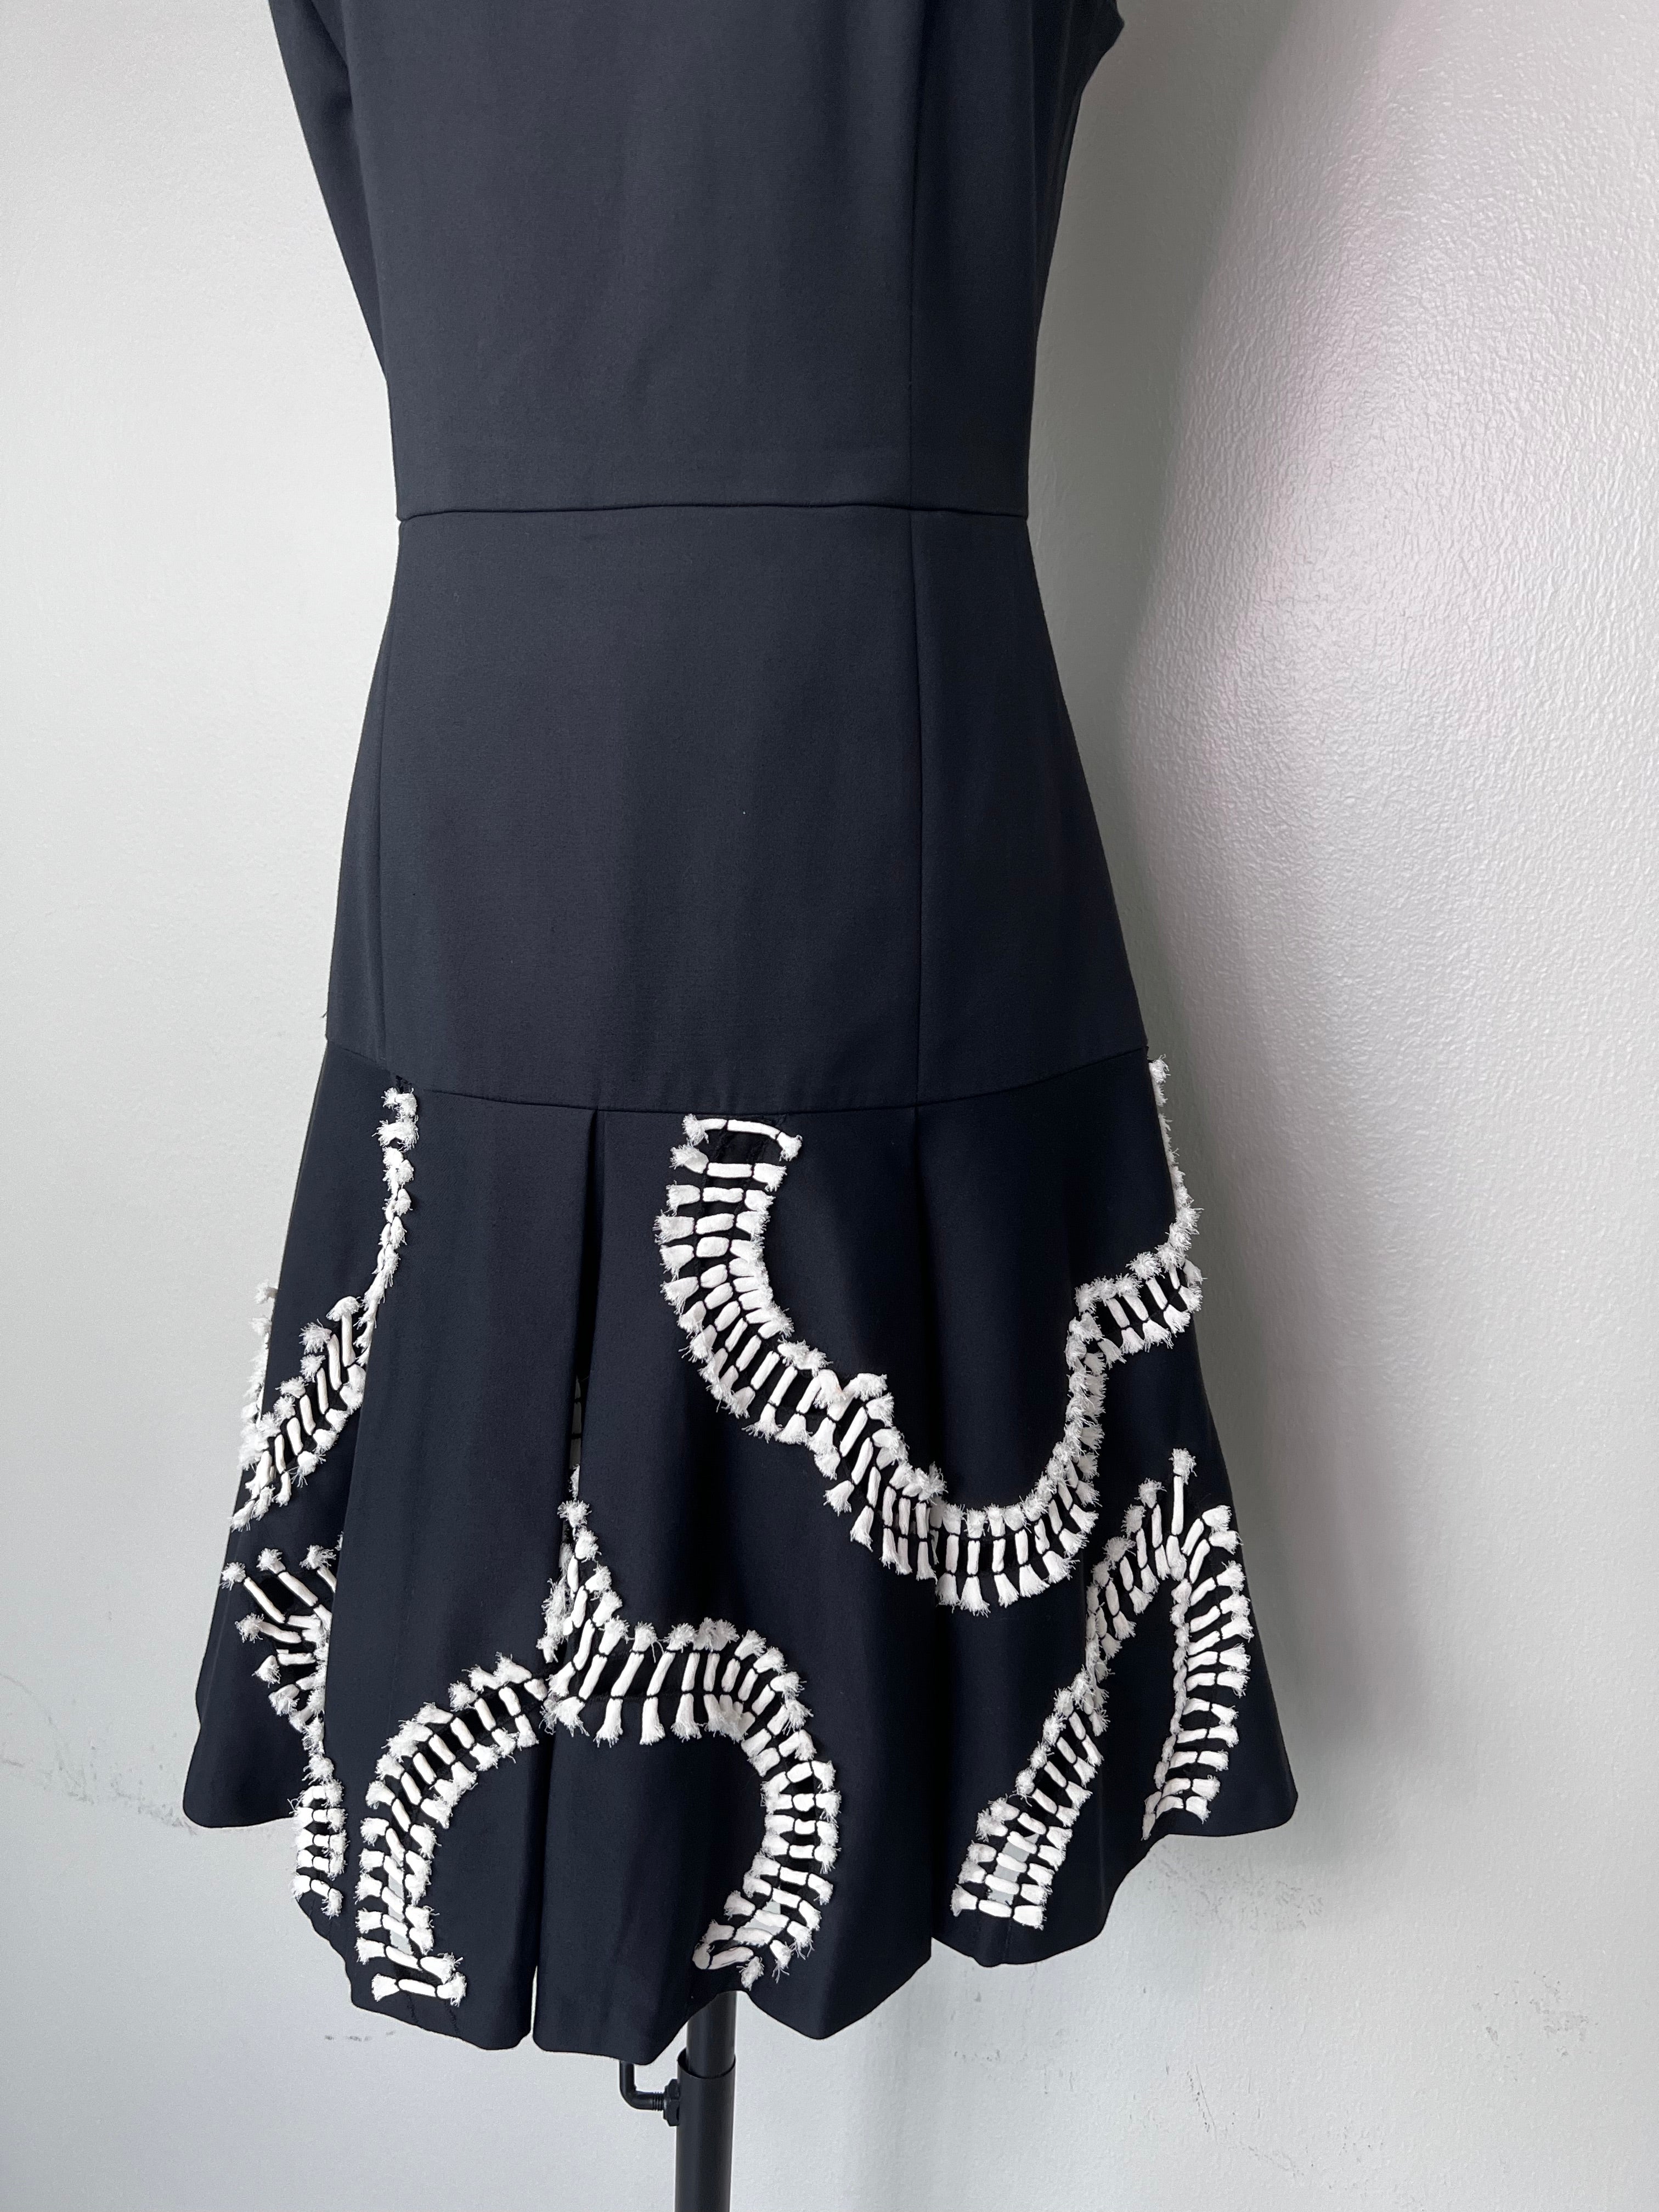 Short black A line dress with white detailing - SACHIN + BABI